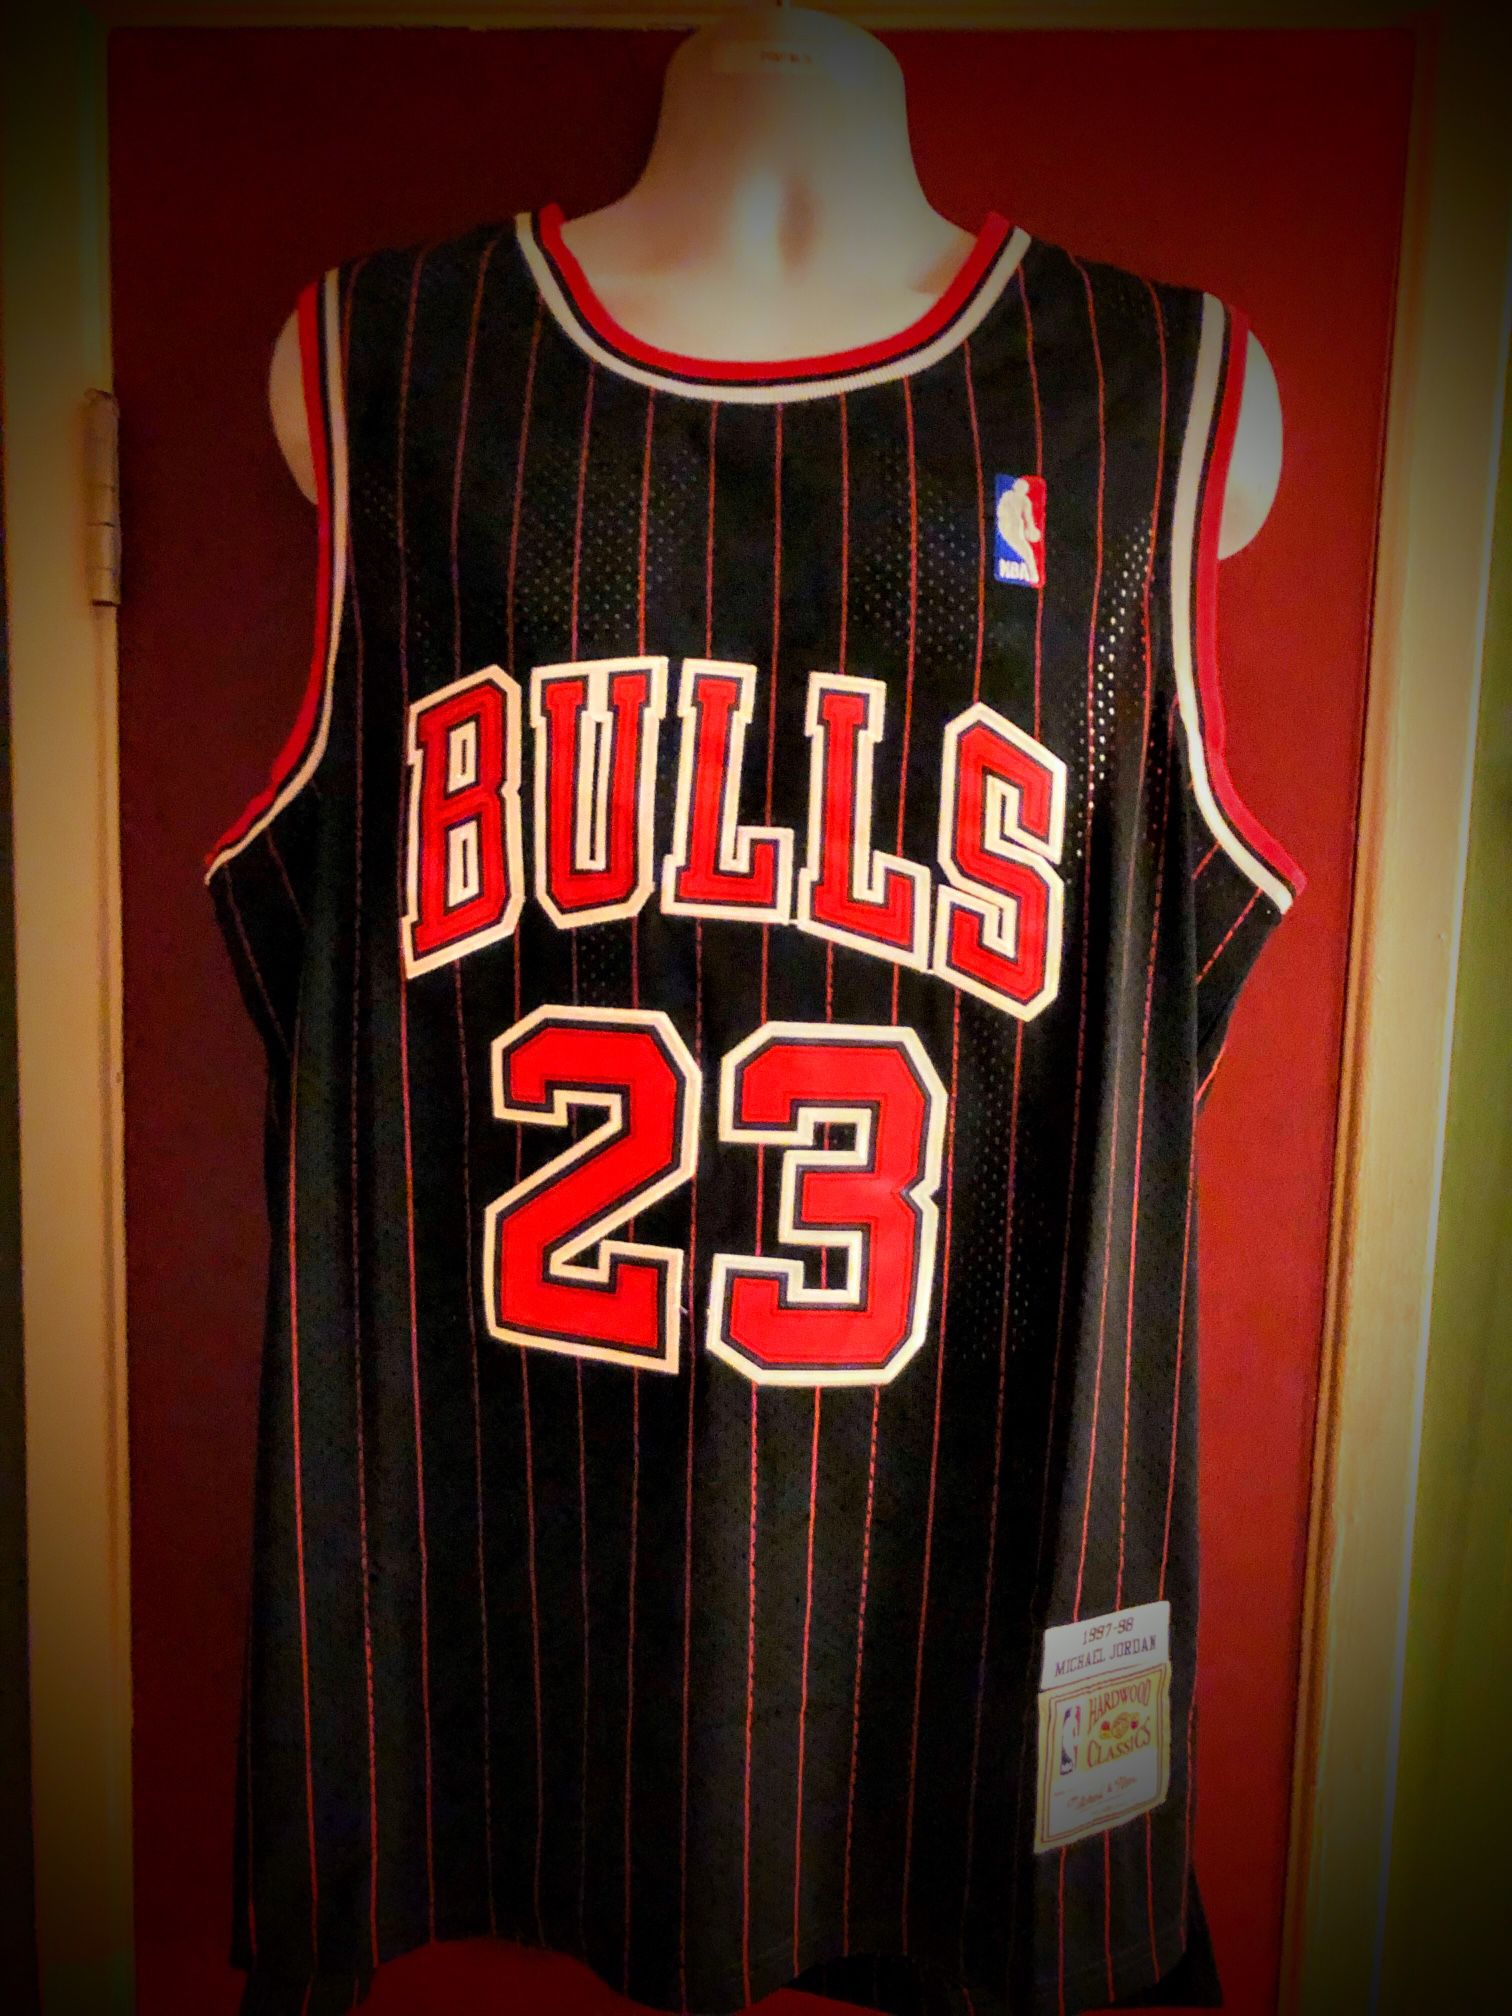 Jordan 23 Basketball Jersey, XL / Black